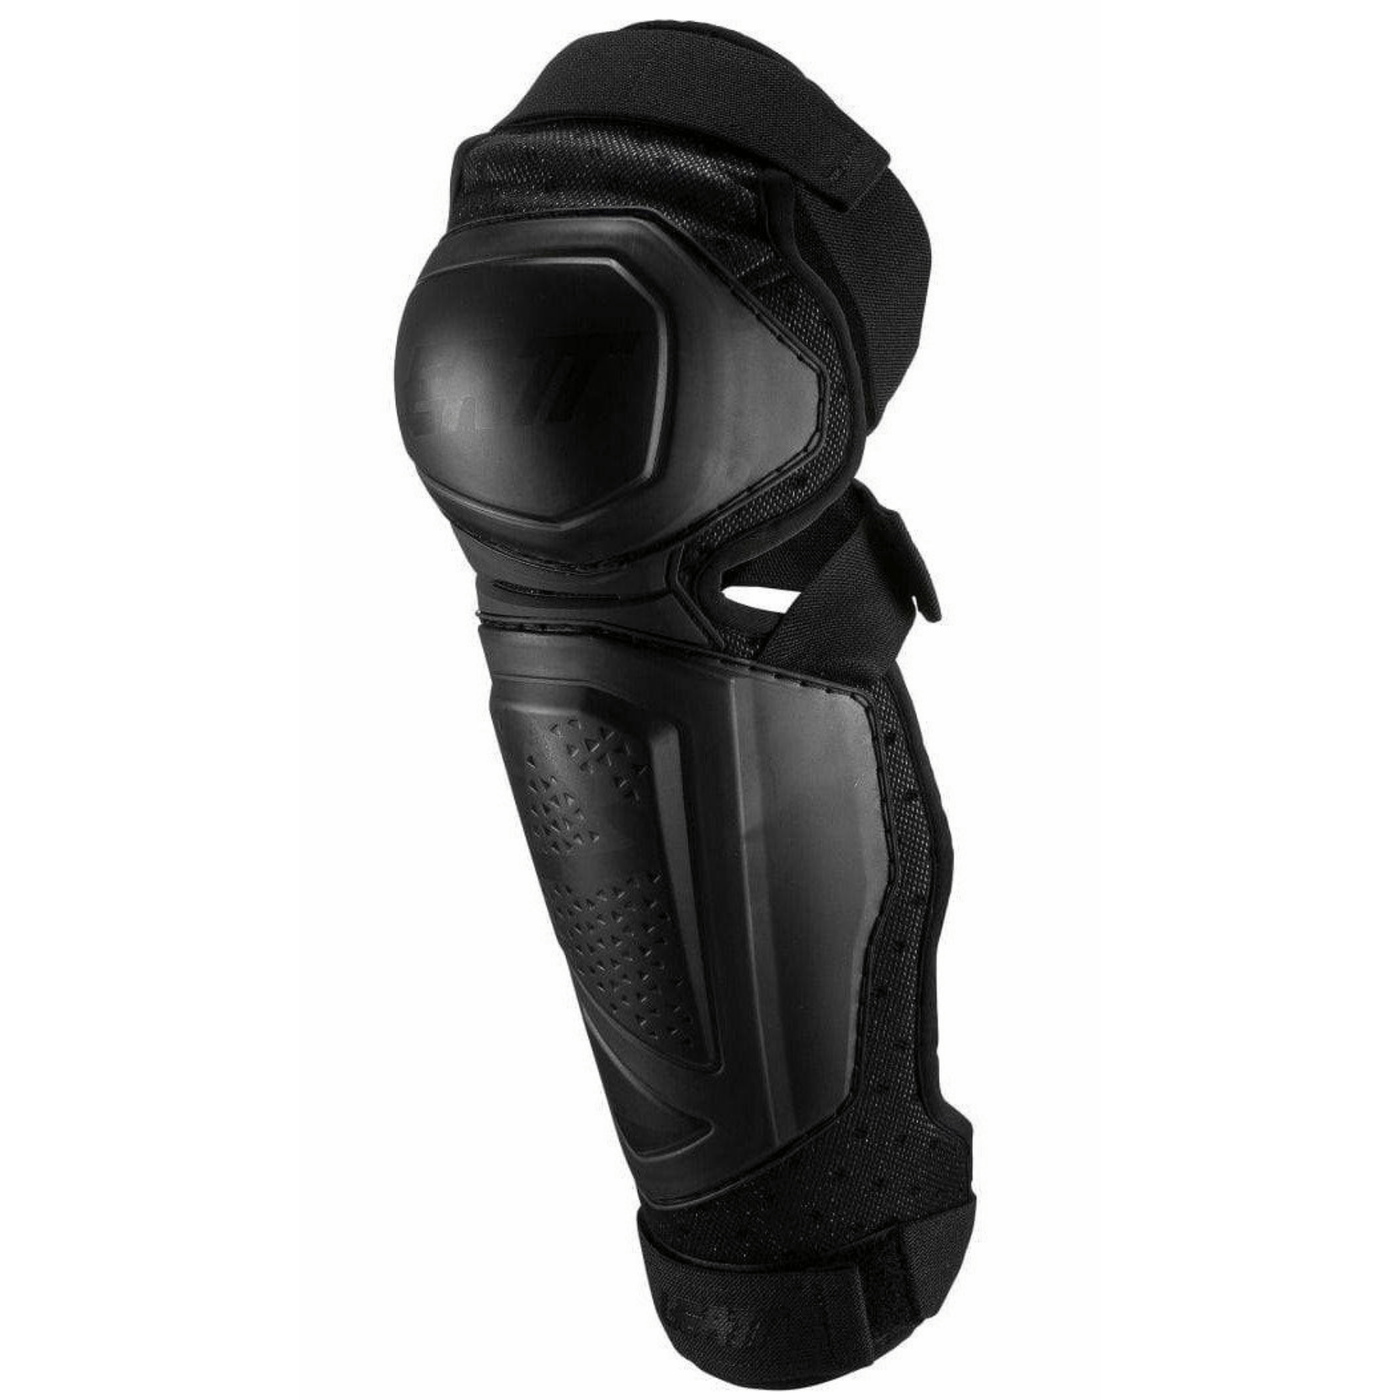 LEATT Knee & Shin Guards 3.0 EXT - Black